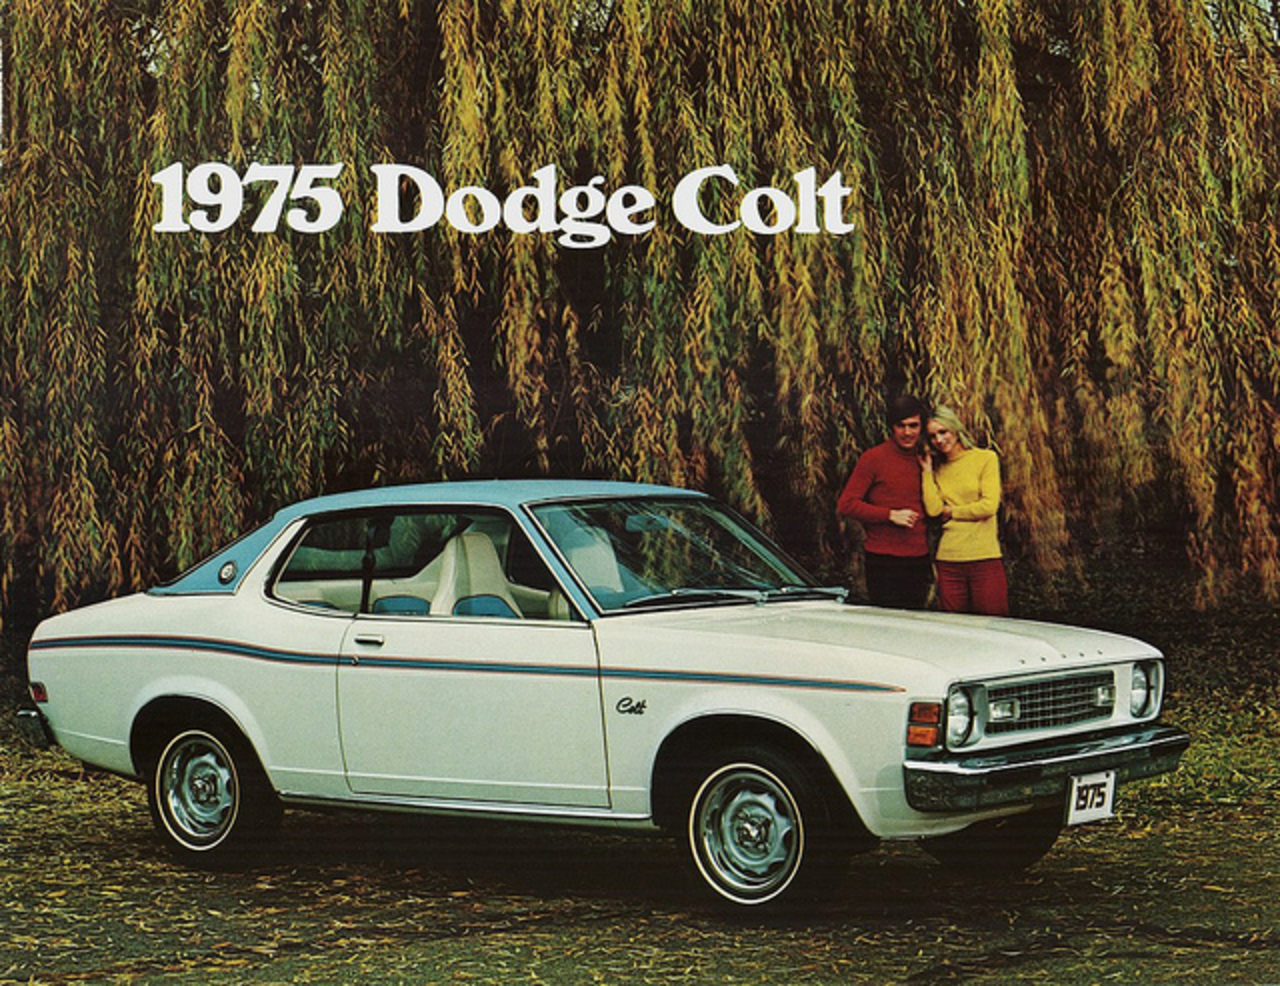 1975 Dodge Colt Carousel 2-Door Hardtop | Flickr - Photo Sharing!